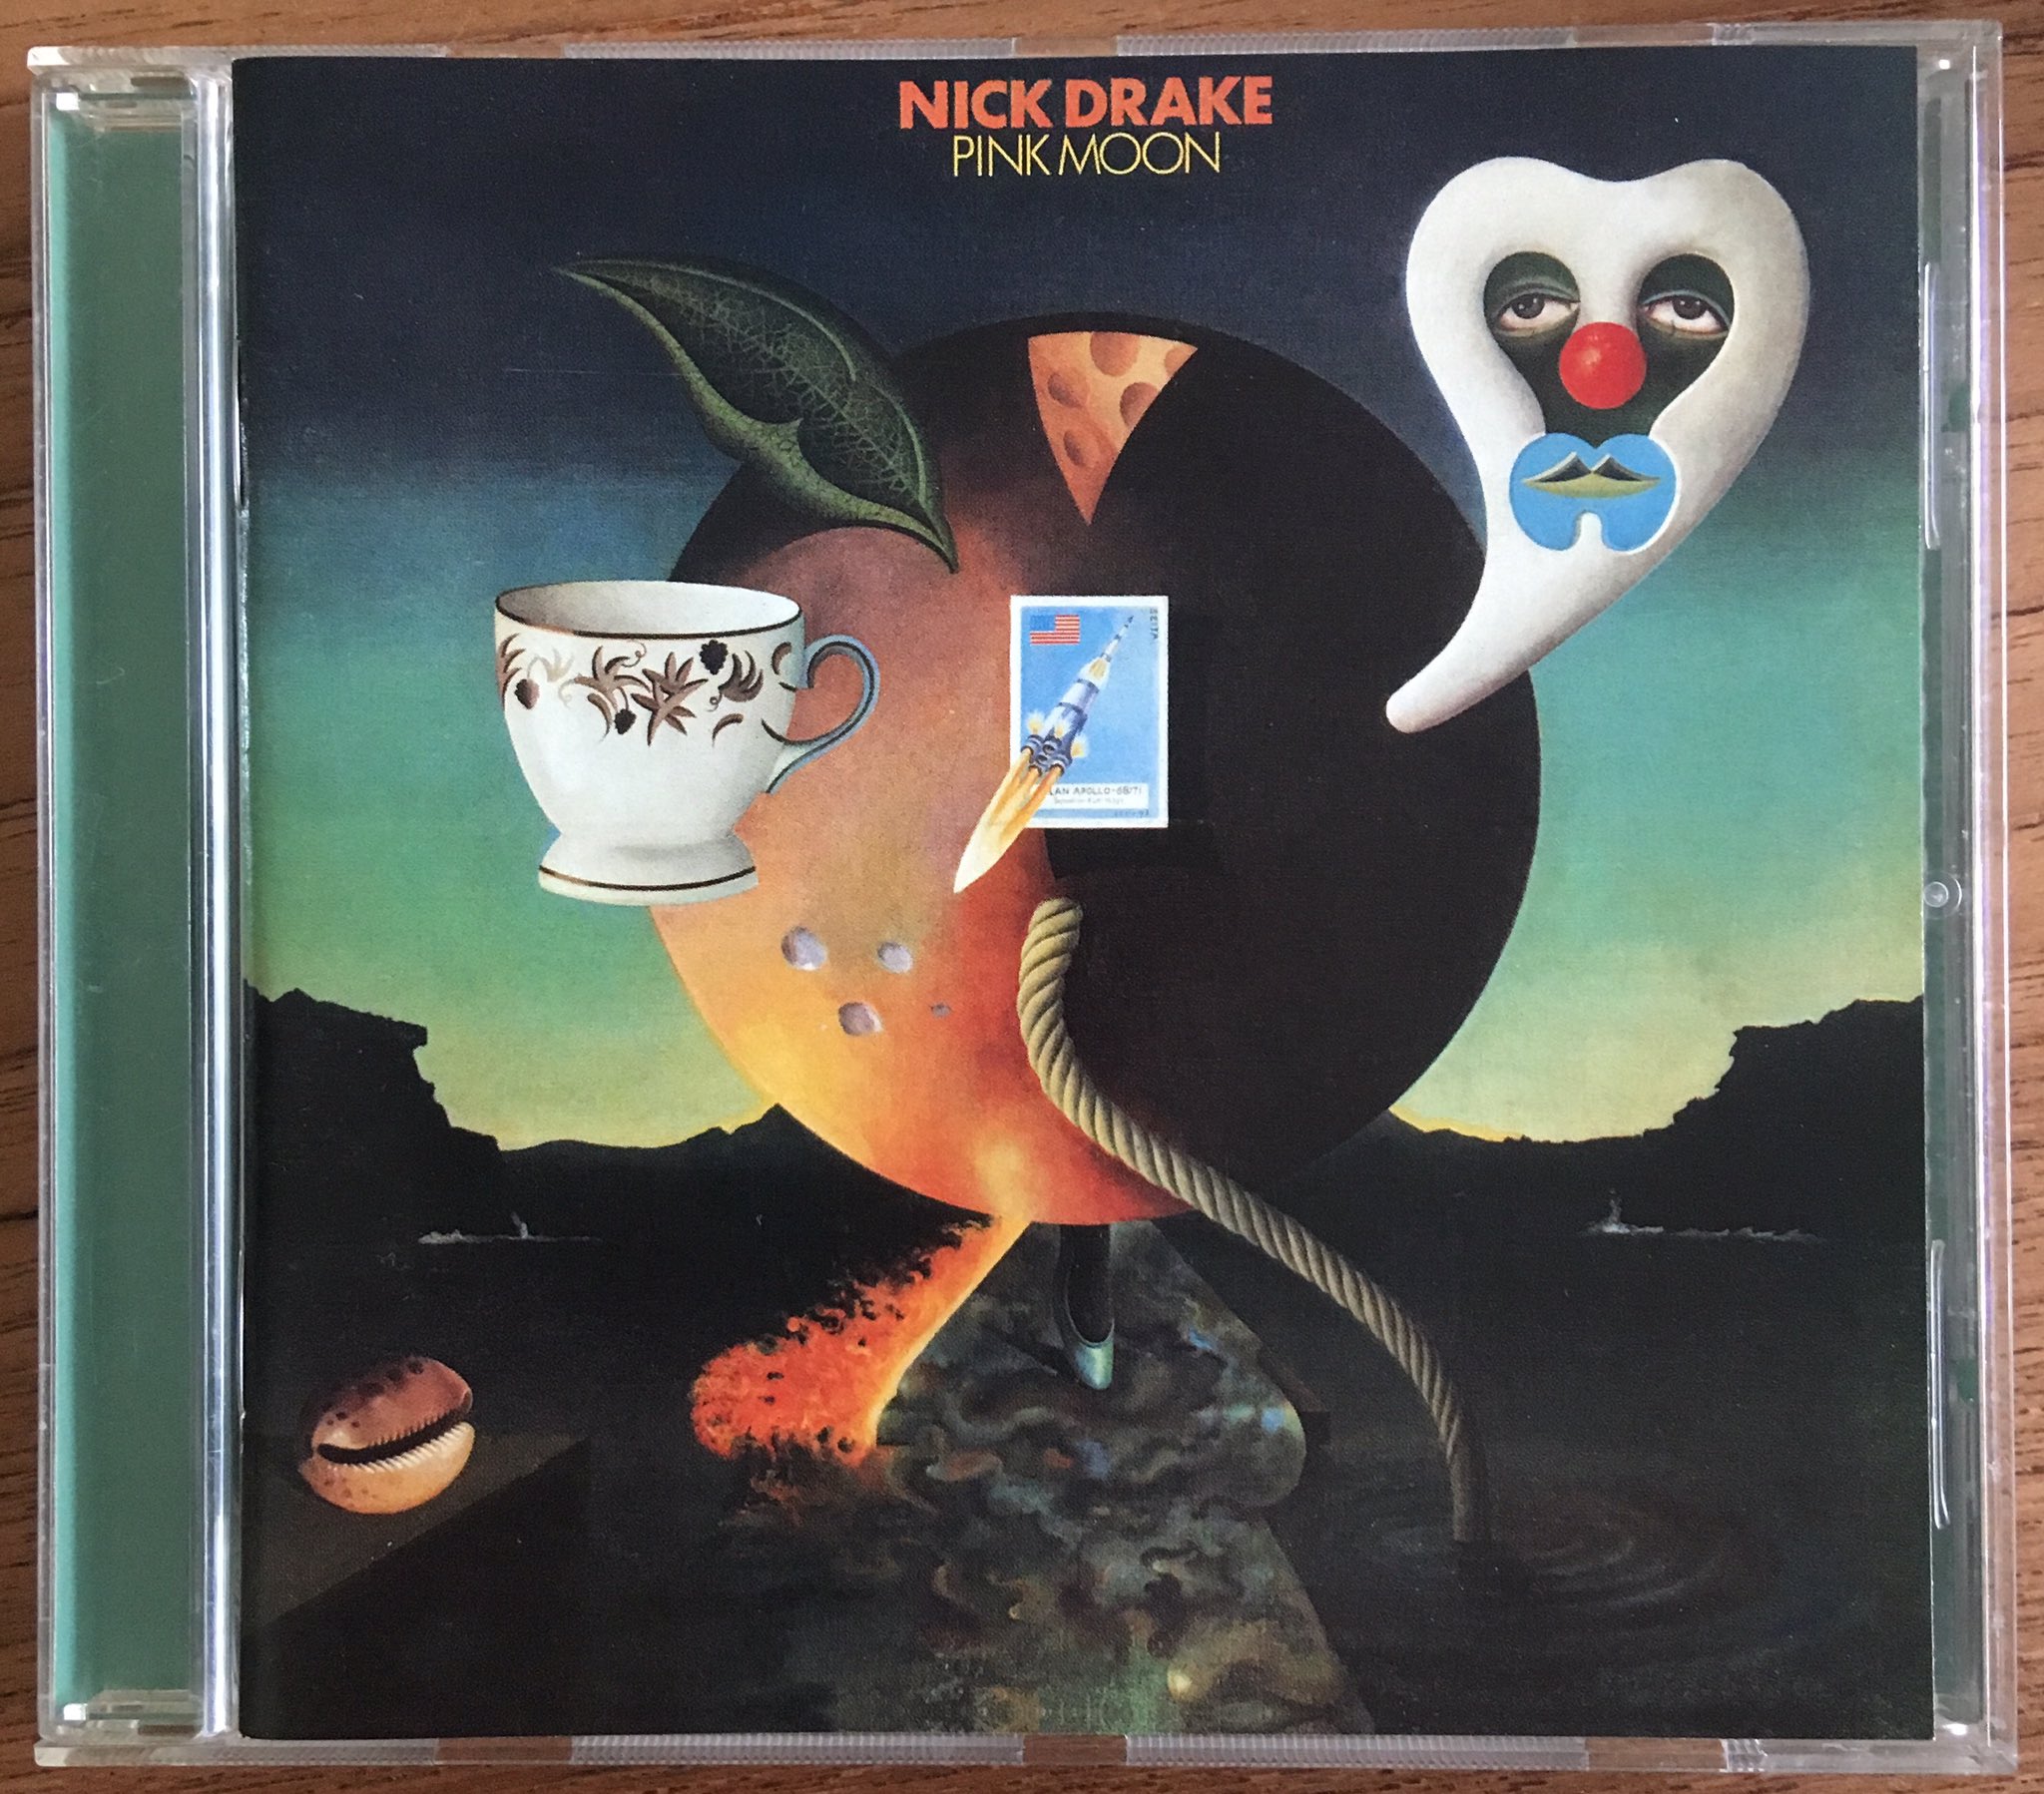 Now playing Happy Birthday Nick Drake 1948-1974  